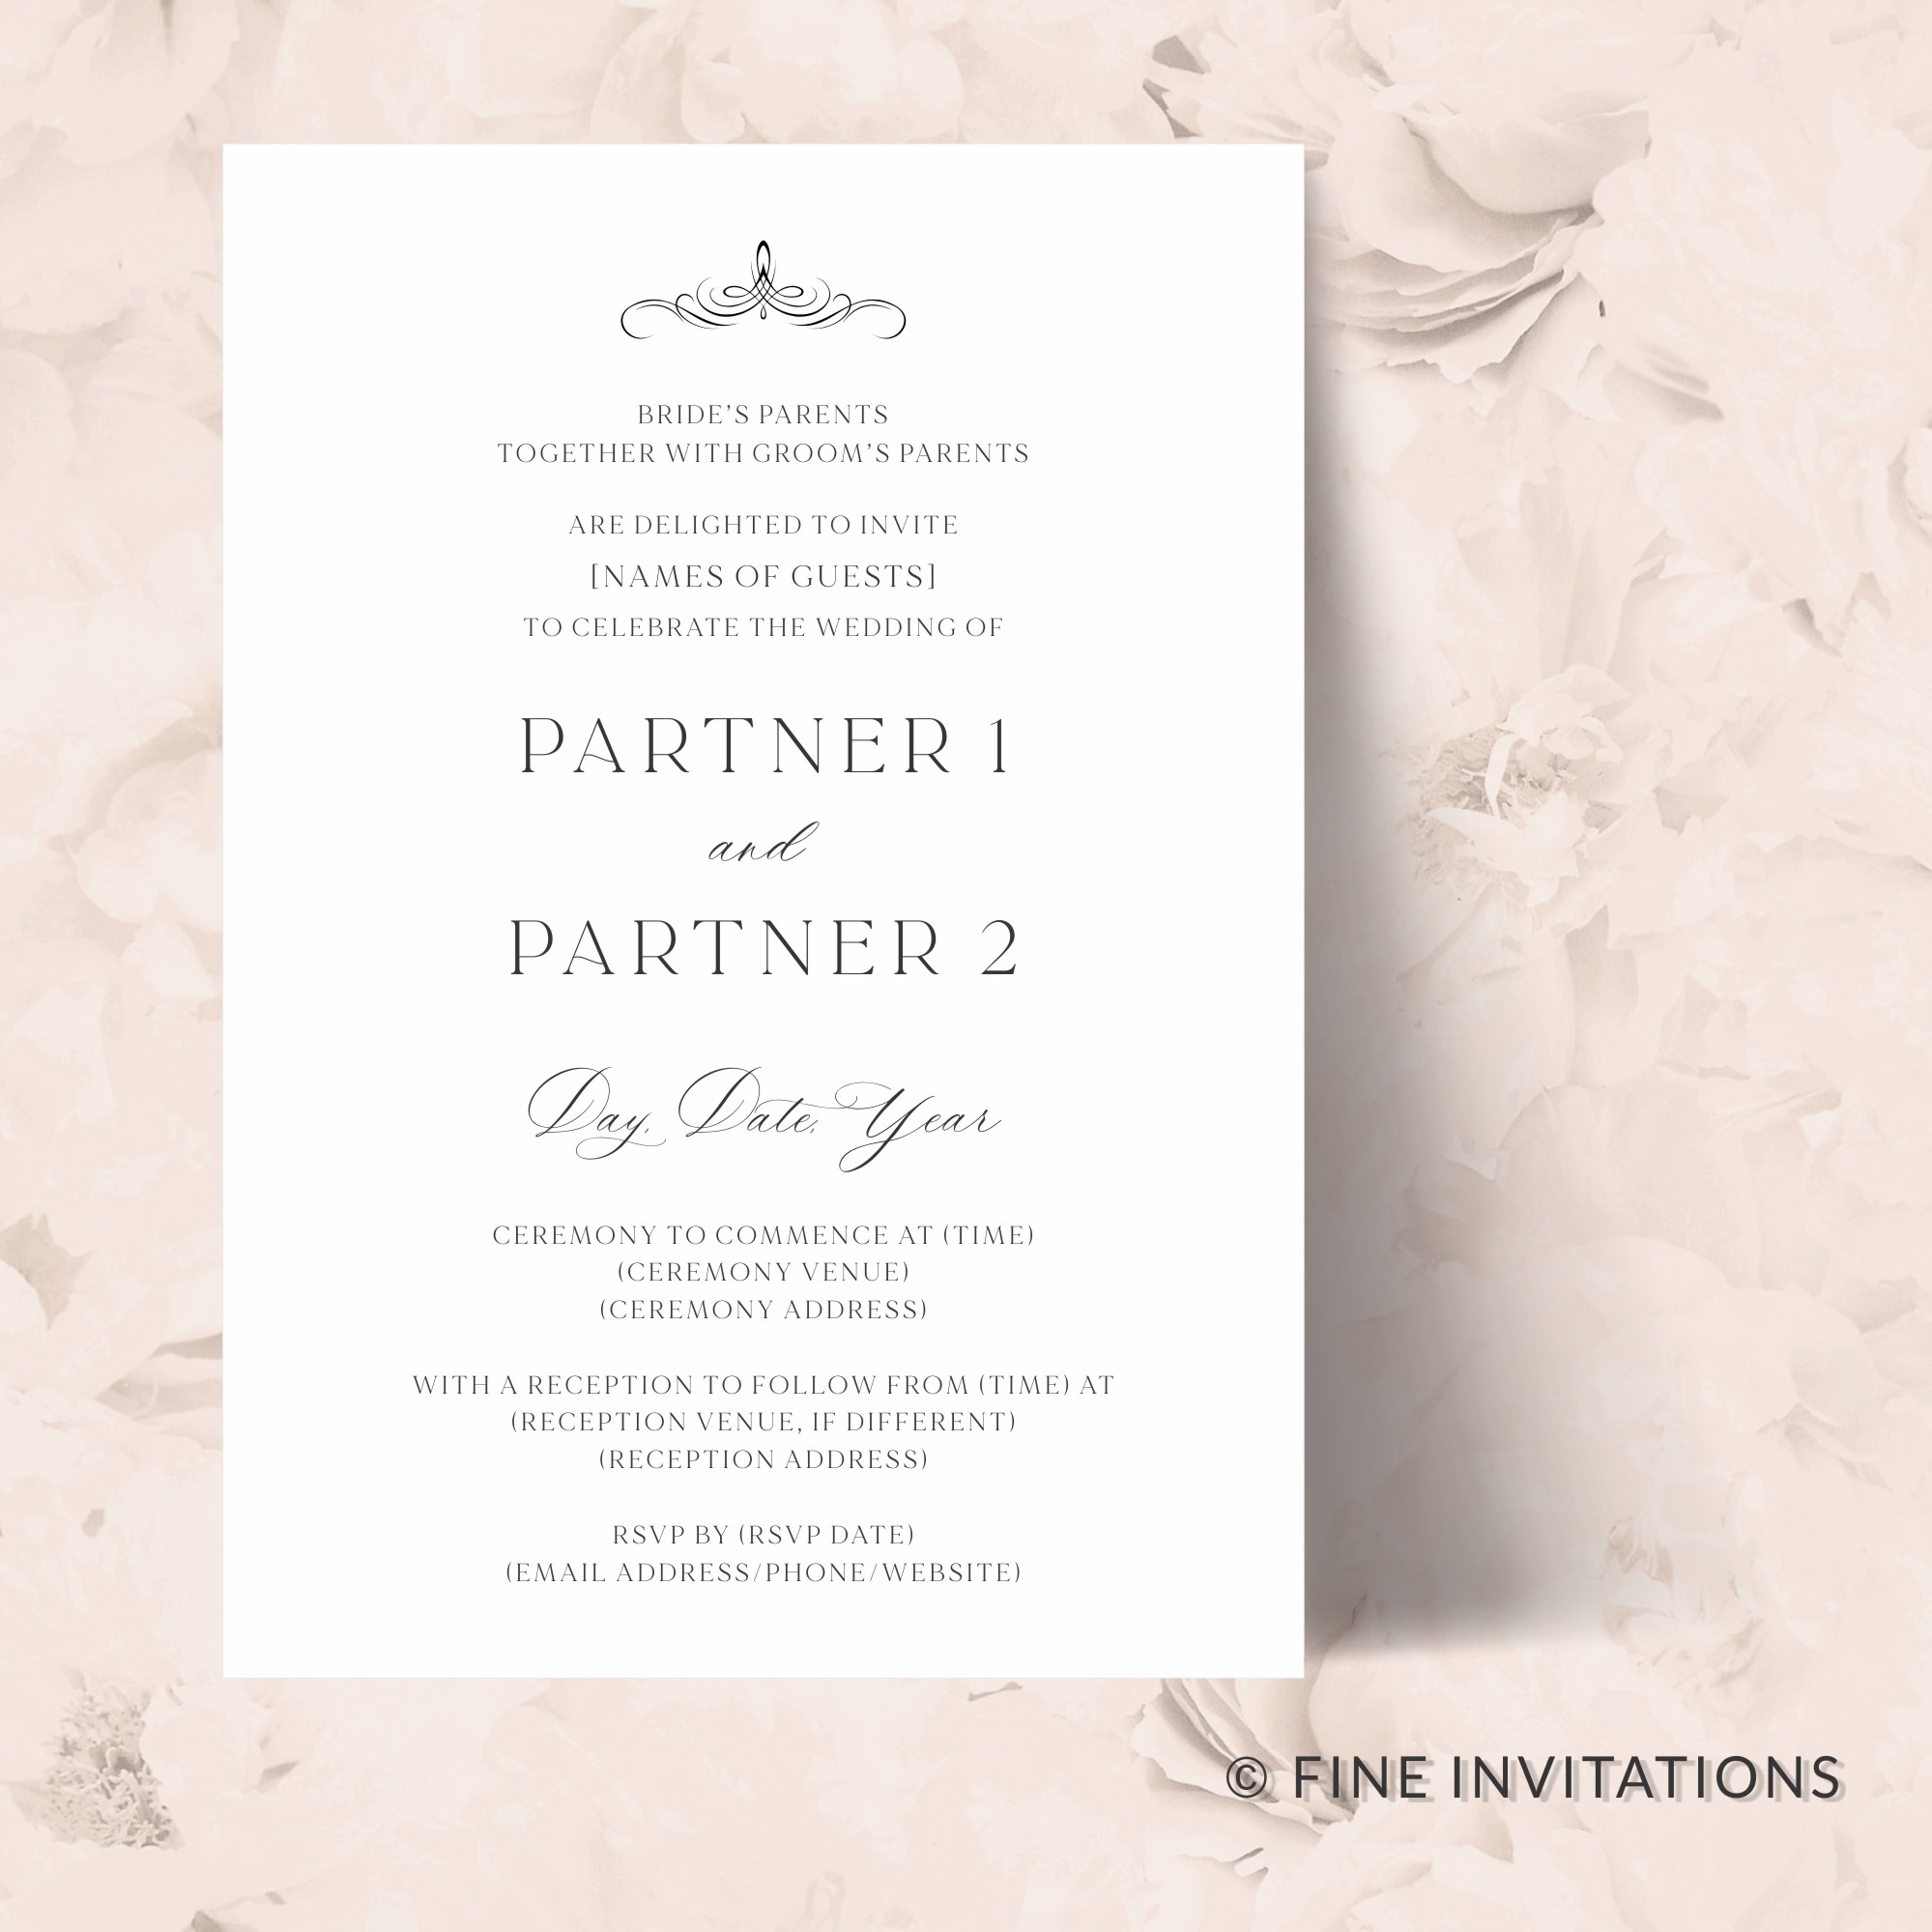 Stylish formal wedding invitation